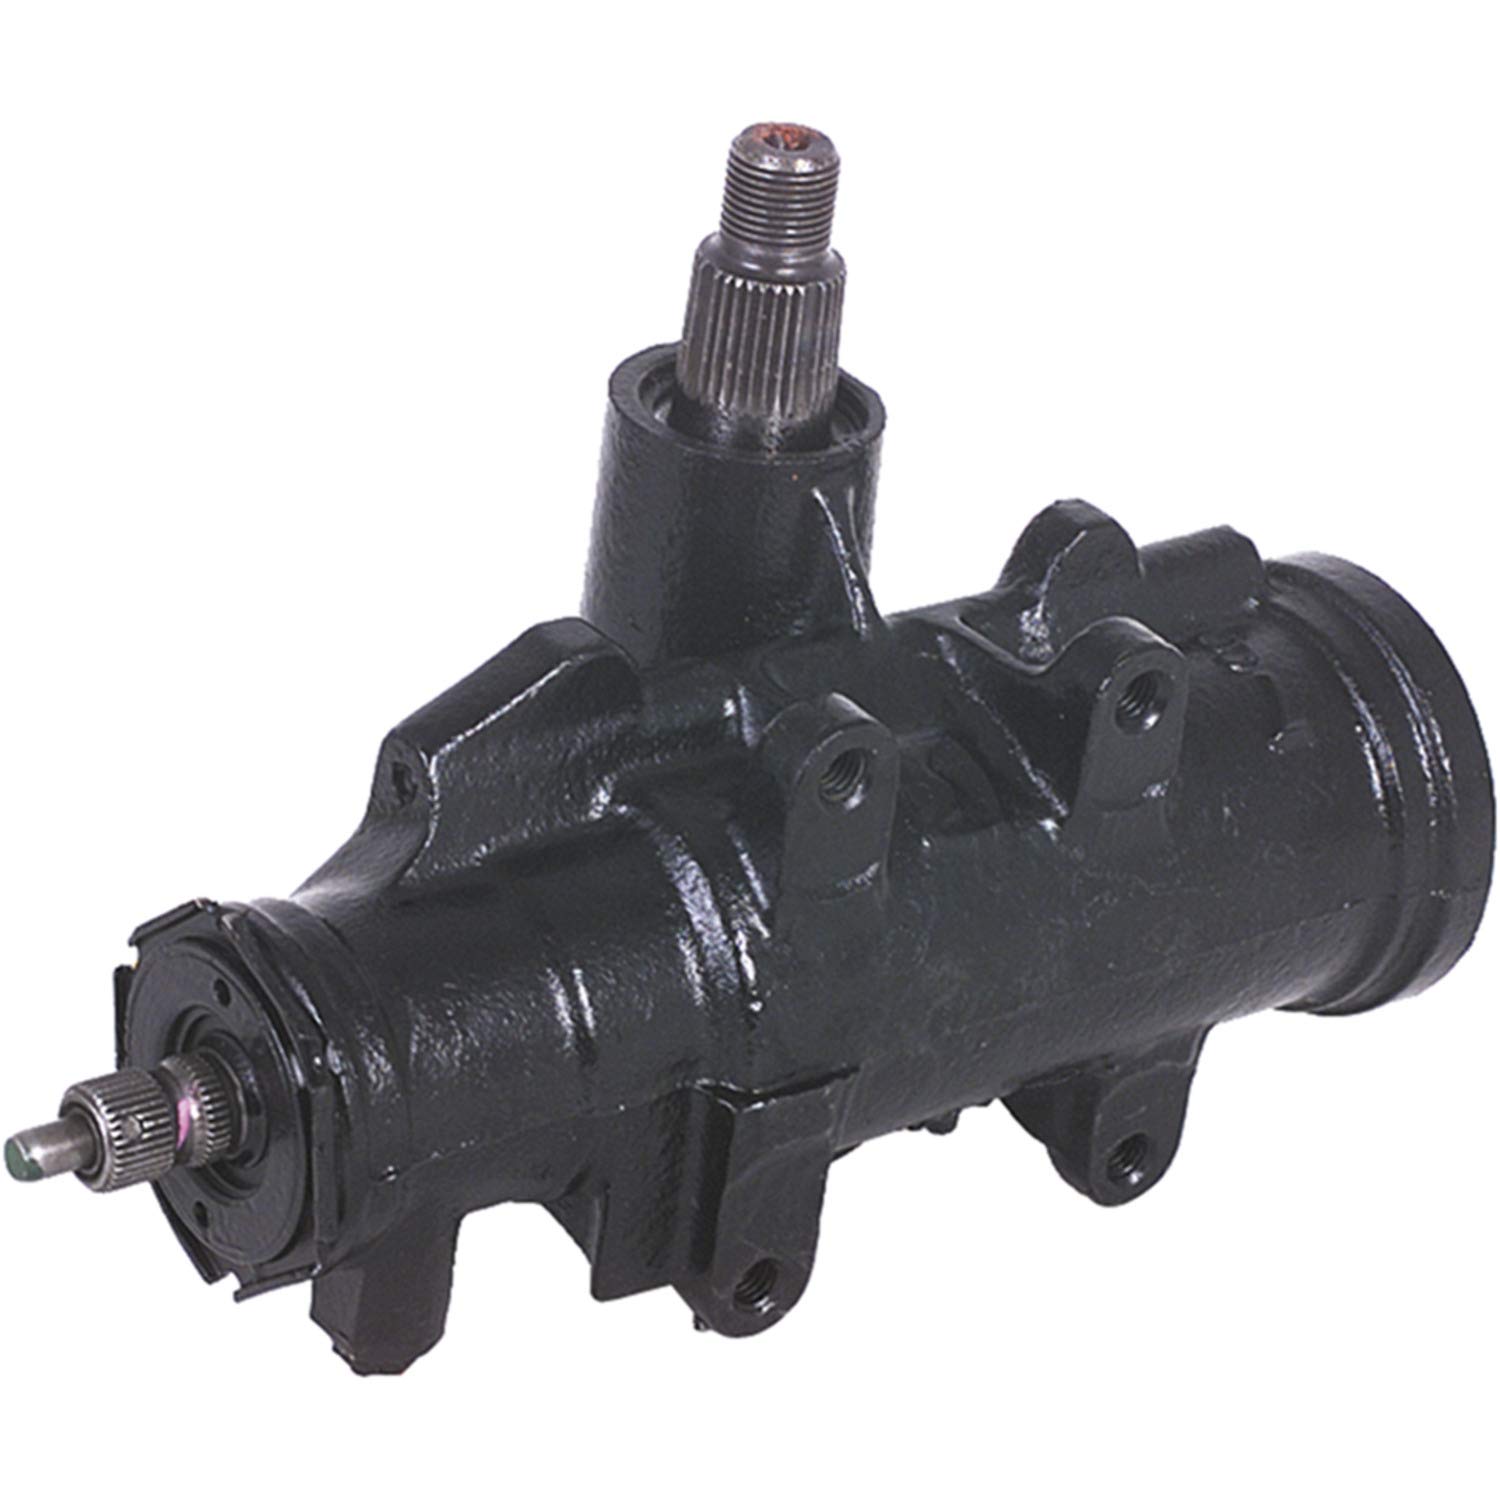 A1 Cardone 27-6537 Remanufactured Power Steering Gear Black, Size:- Input Shaft Diameter (in): 0.80 ; Input Shaft Diameter (mm): 20.32 ; Output Shaft Diameter (i